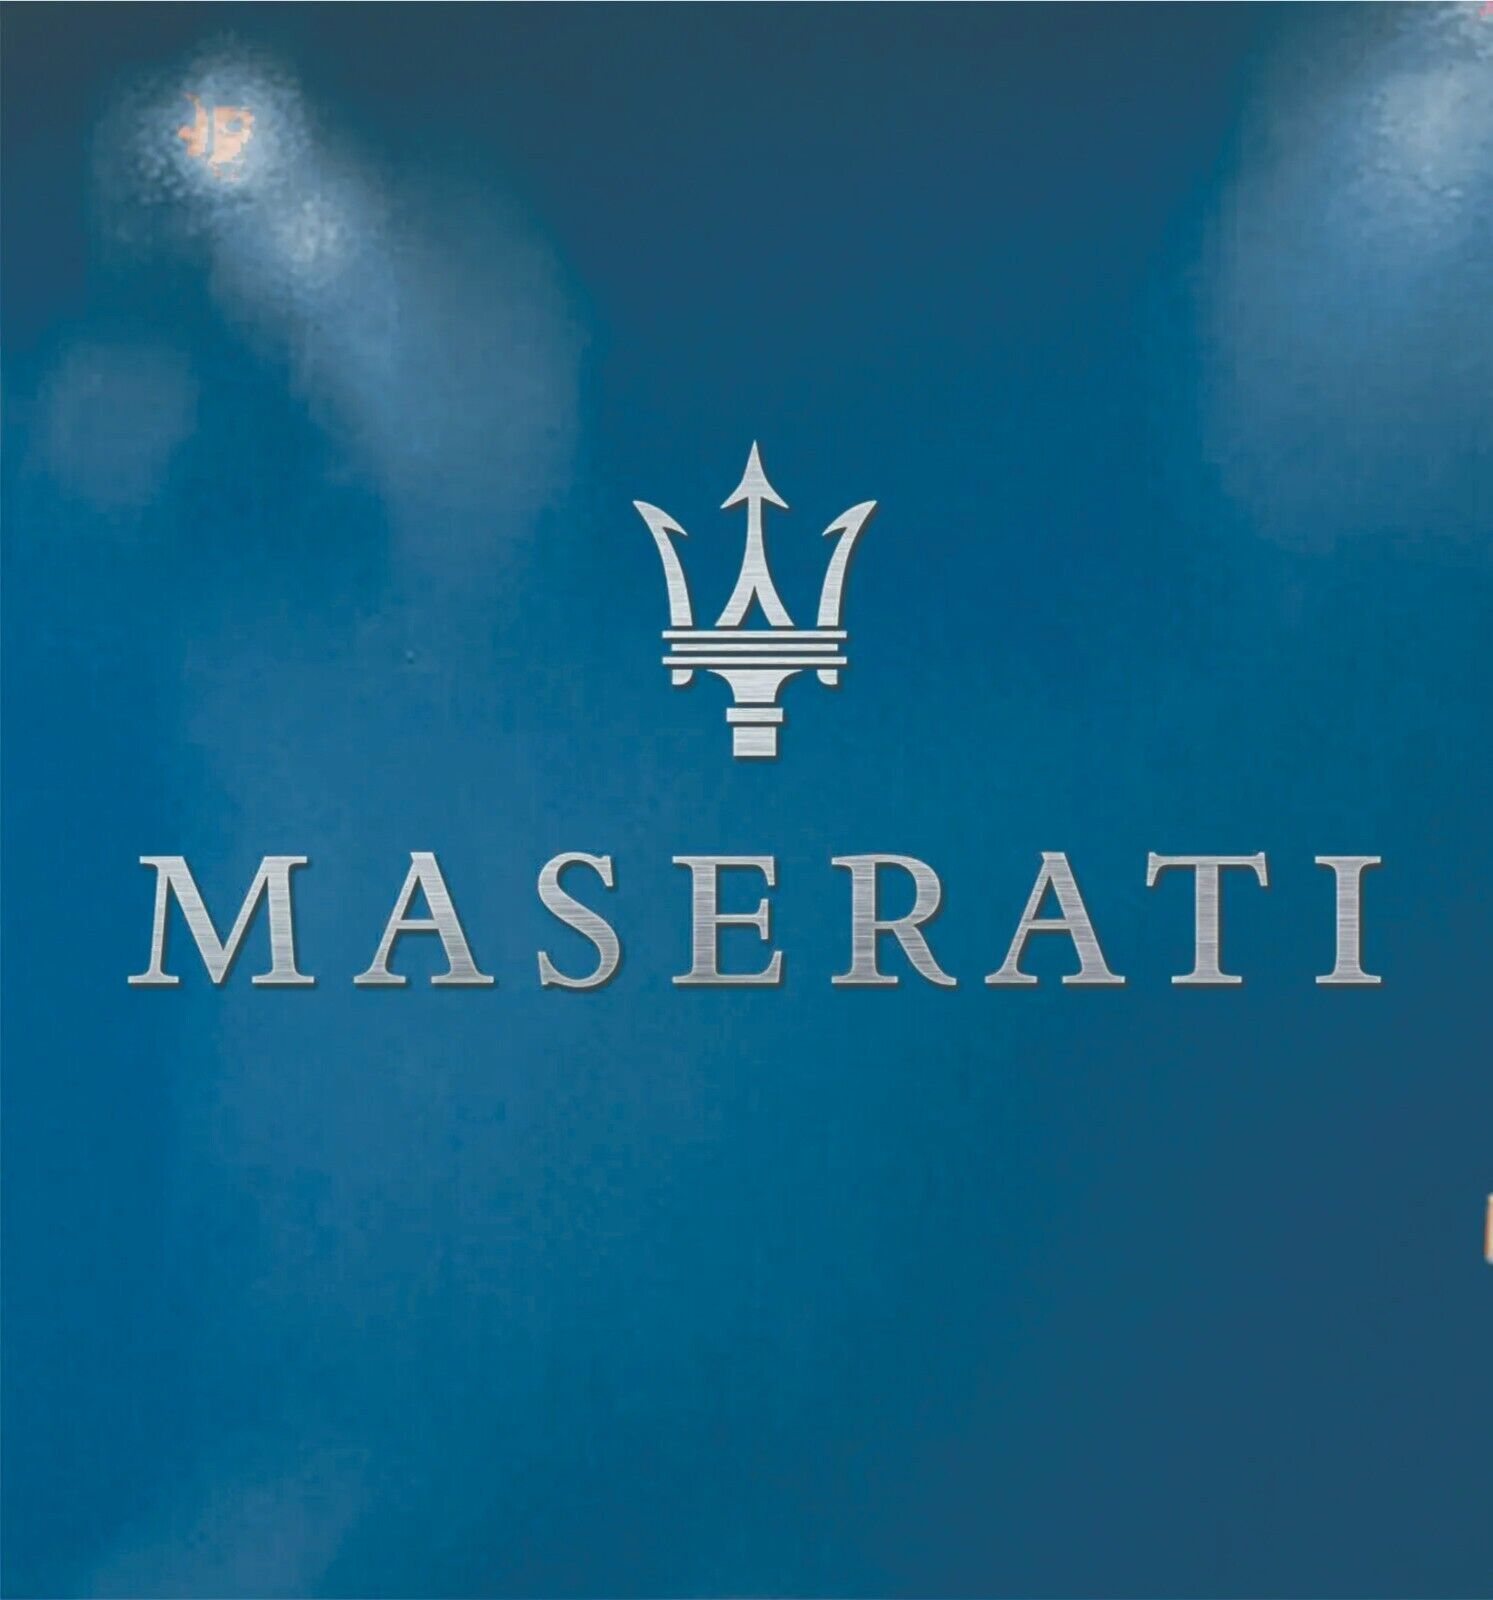 Maserati Garage Sign Brushed Aluminum Lettering 6 Feet Wide